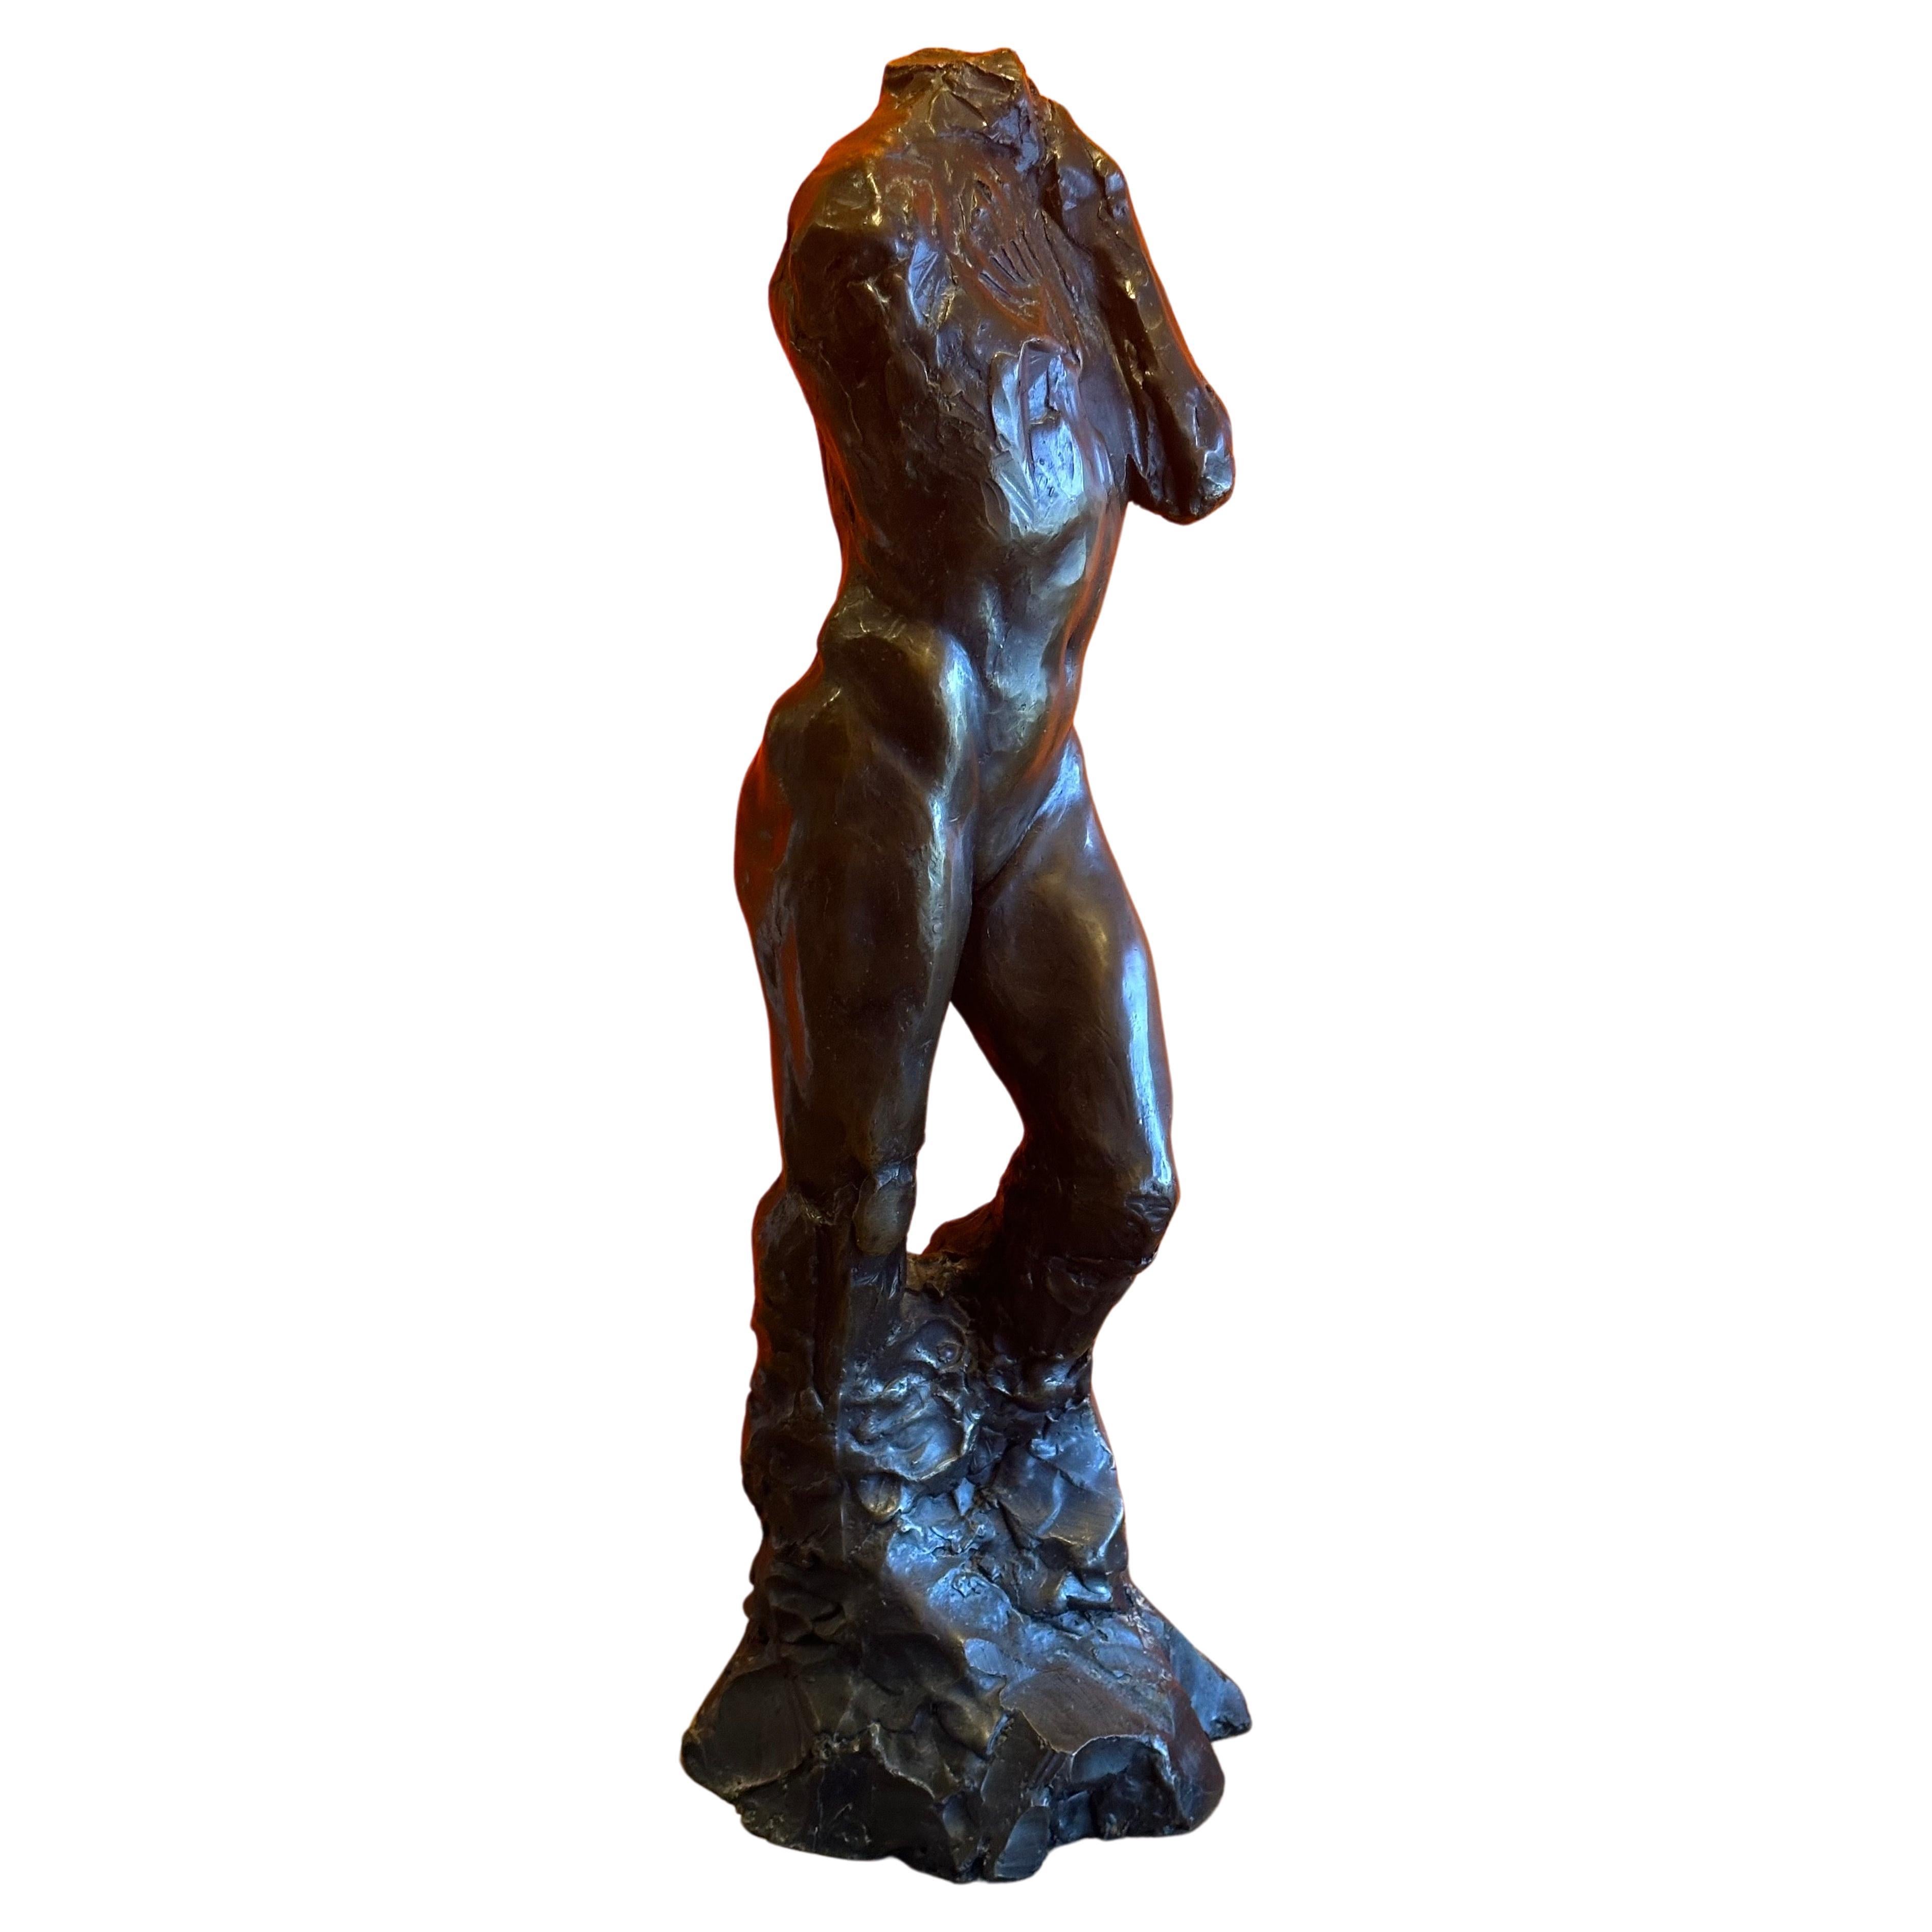 A large figurative bronze sculpture entitled 